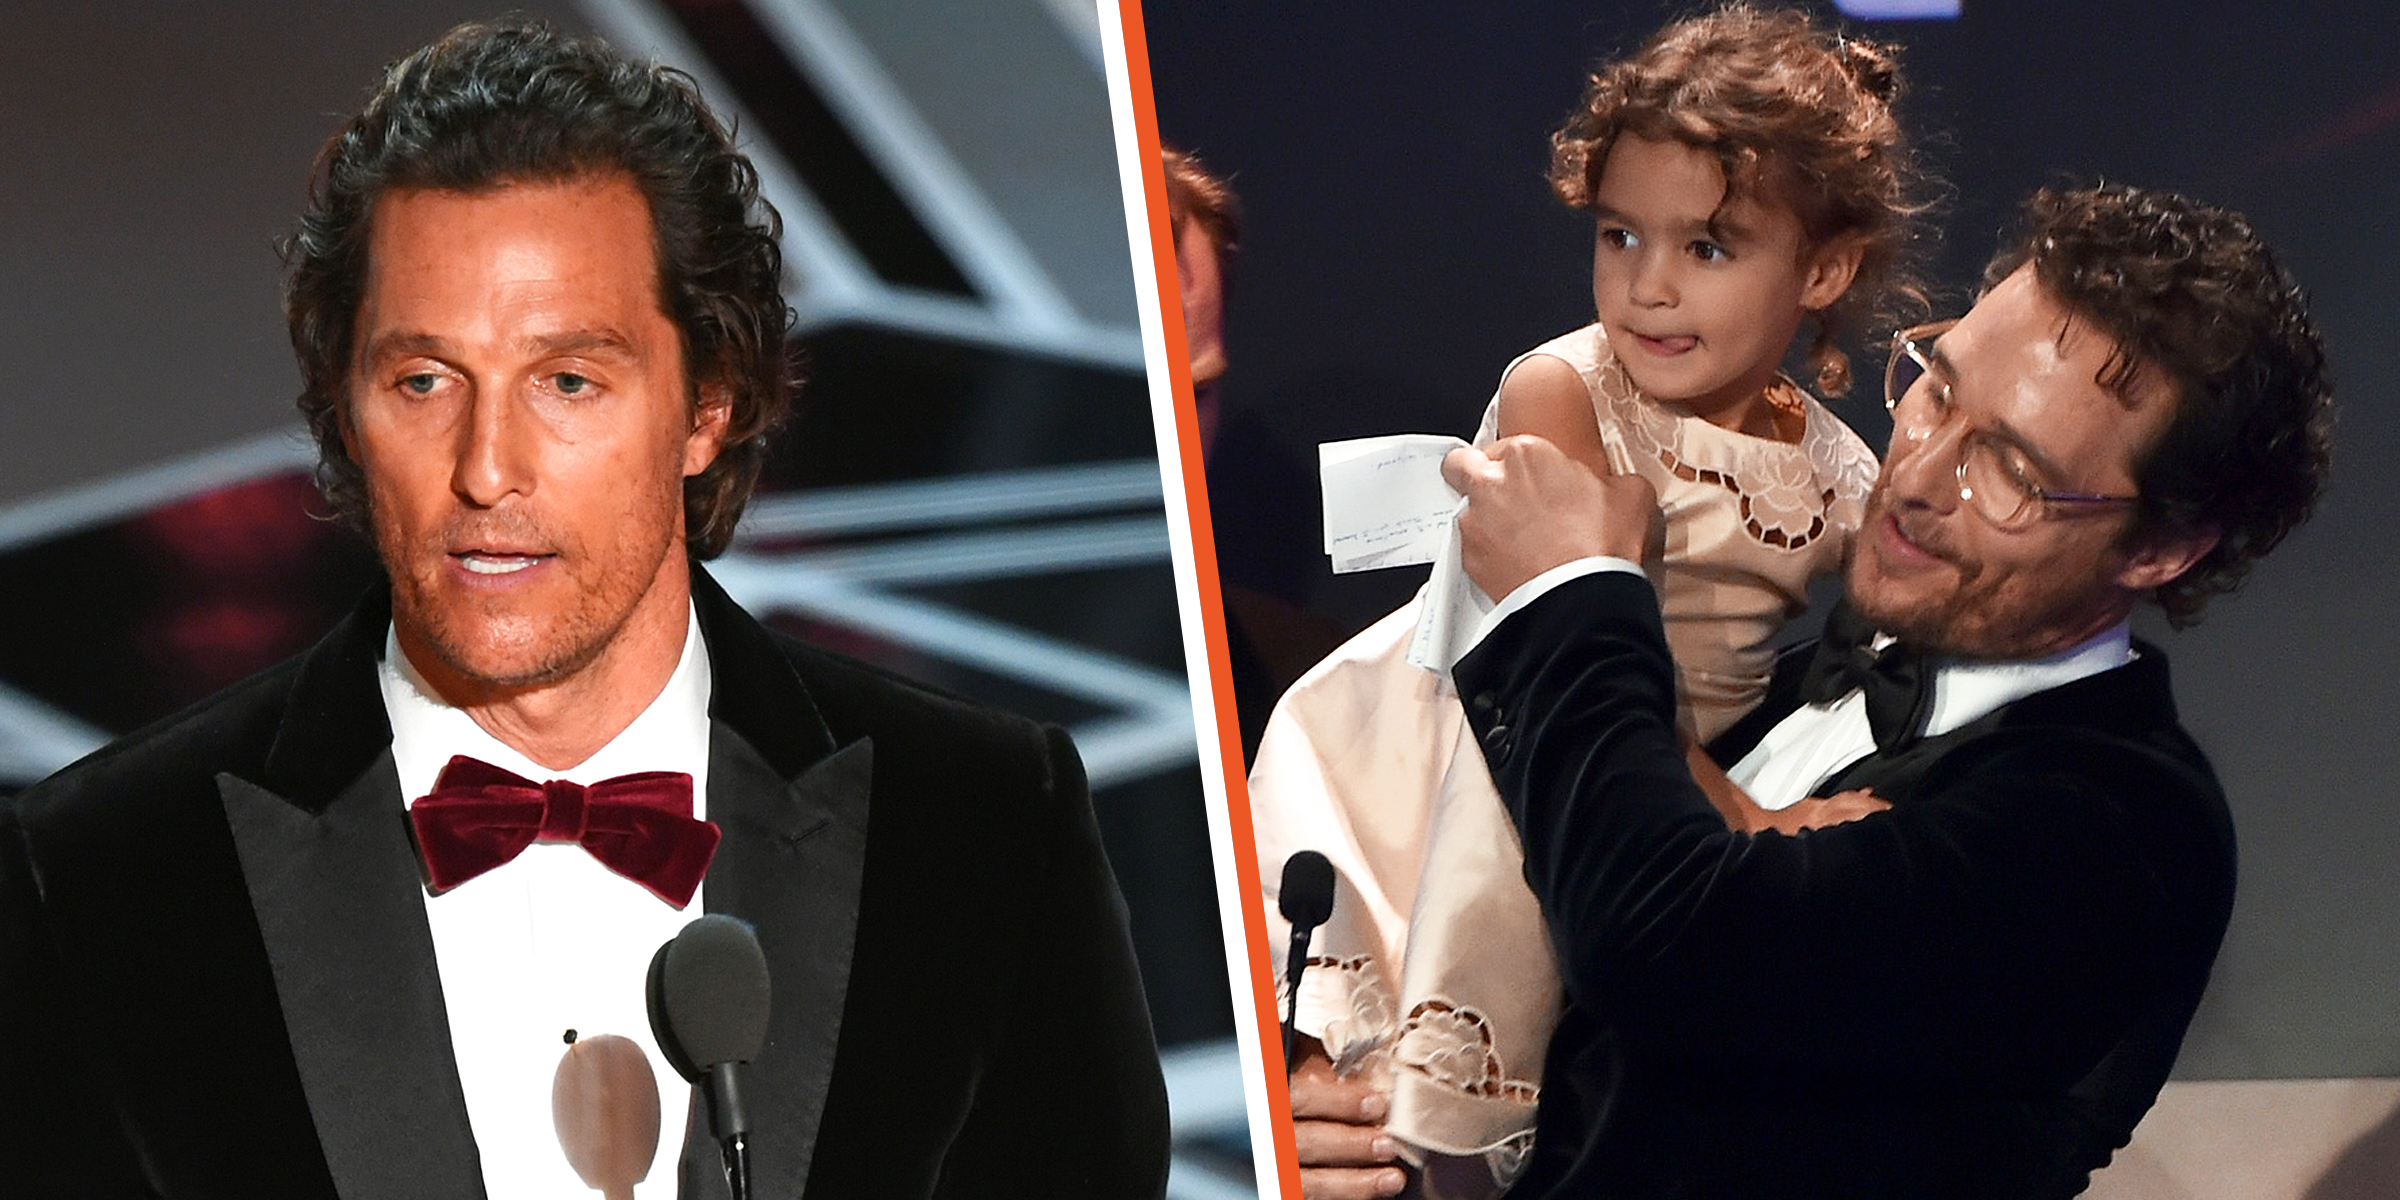 Matthew McConaughey | Matthew McConaughey with his daughter Vida Alves McConaughey | Source: Getty Images